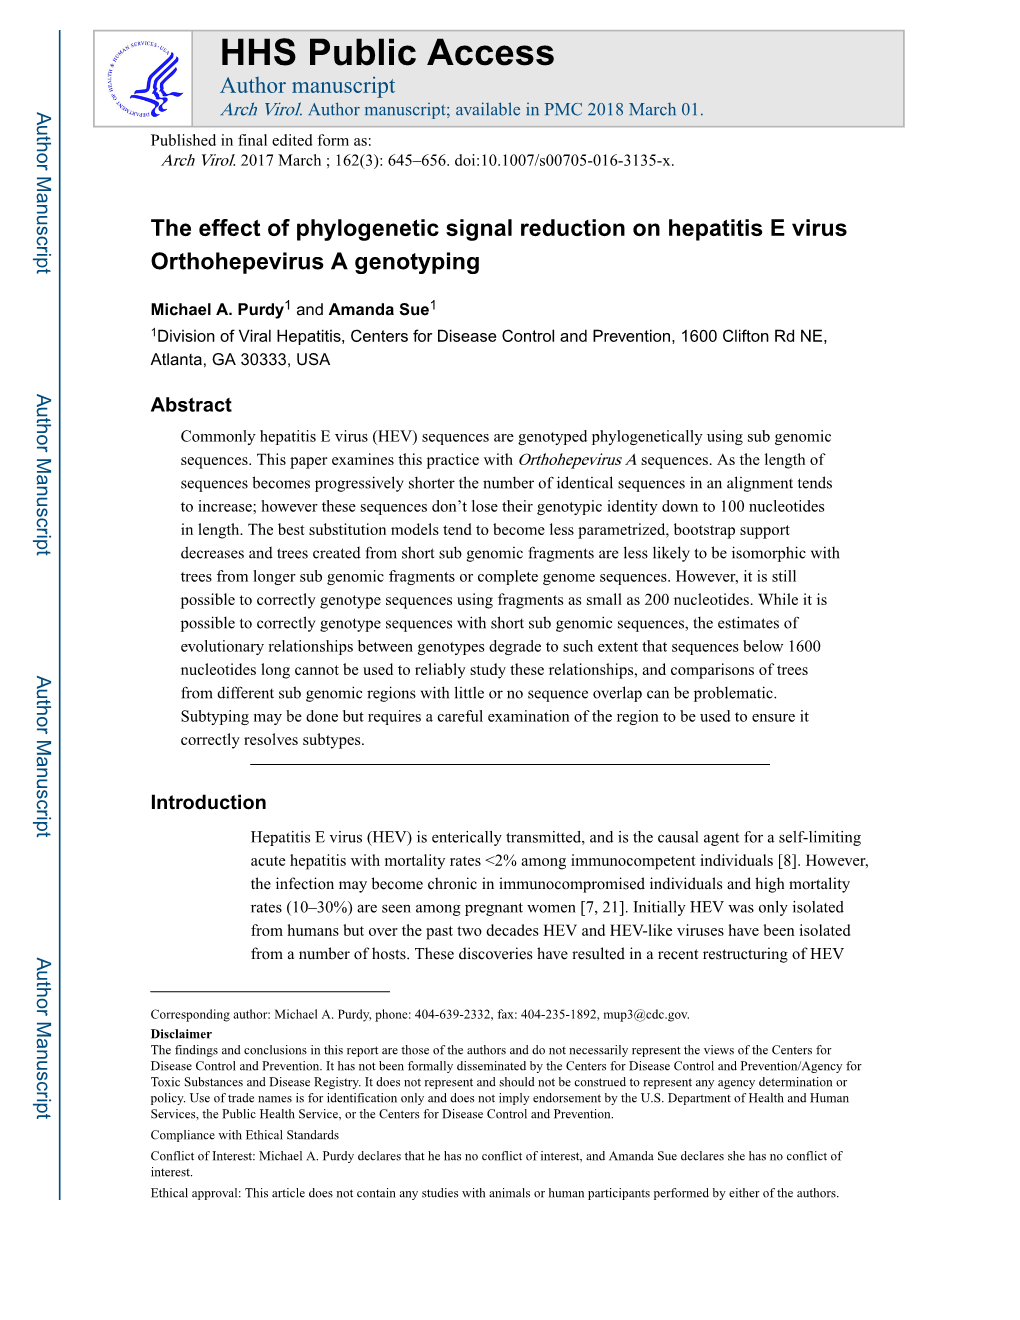 The Effect of Phylogenetic Signal Reduction on Hepatitis E Virus Orthohepevirus a Genotyping